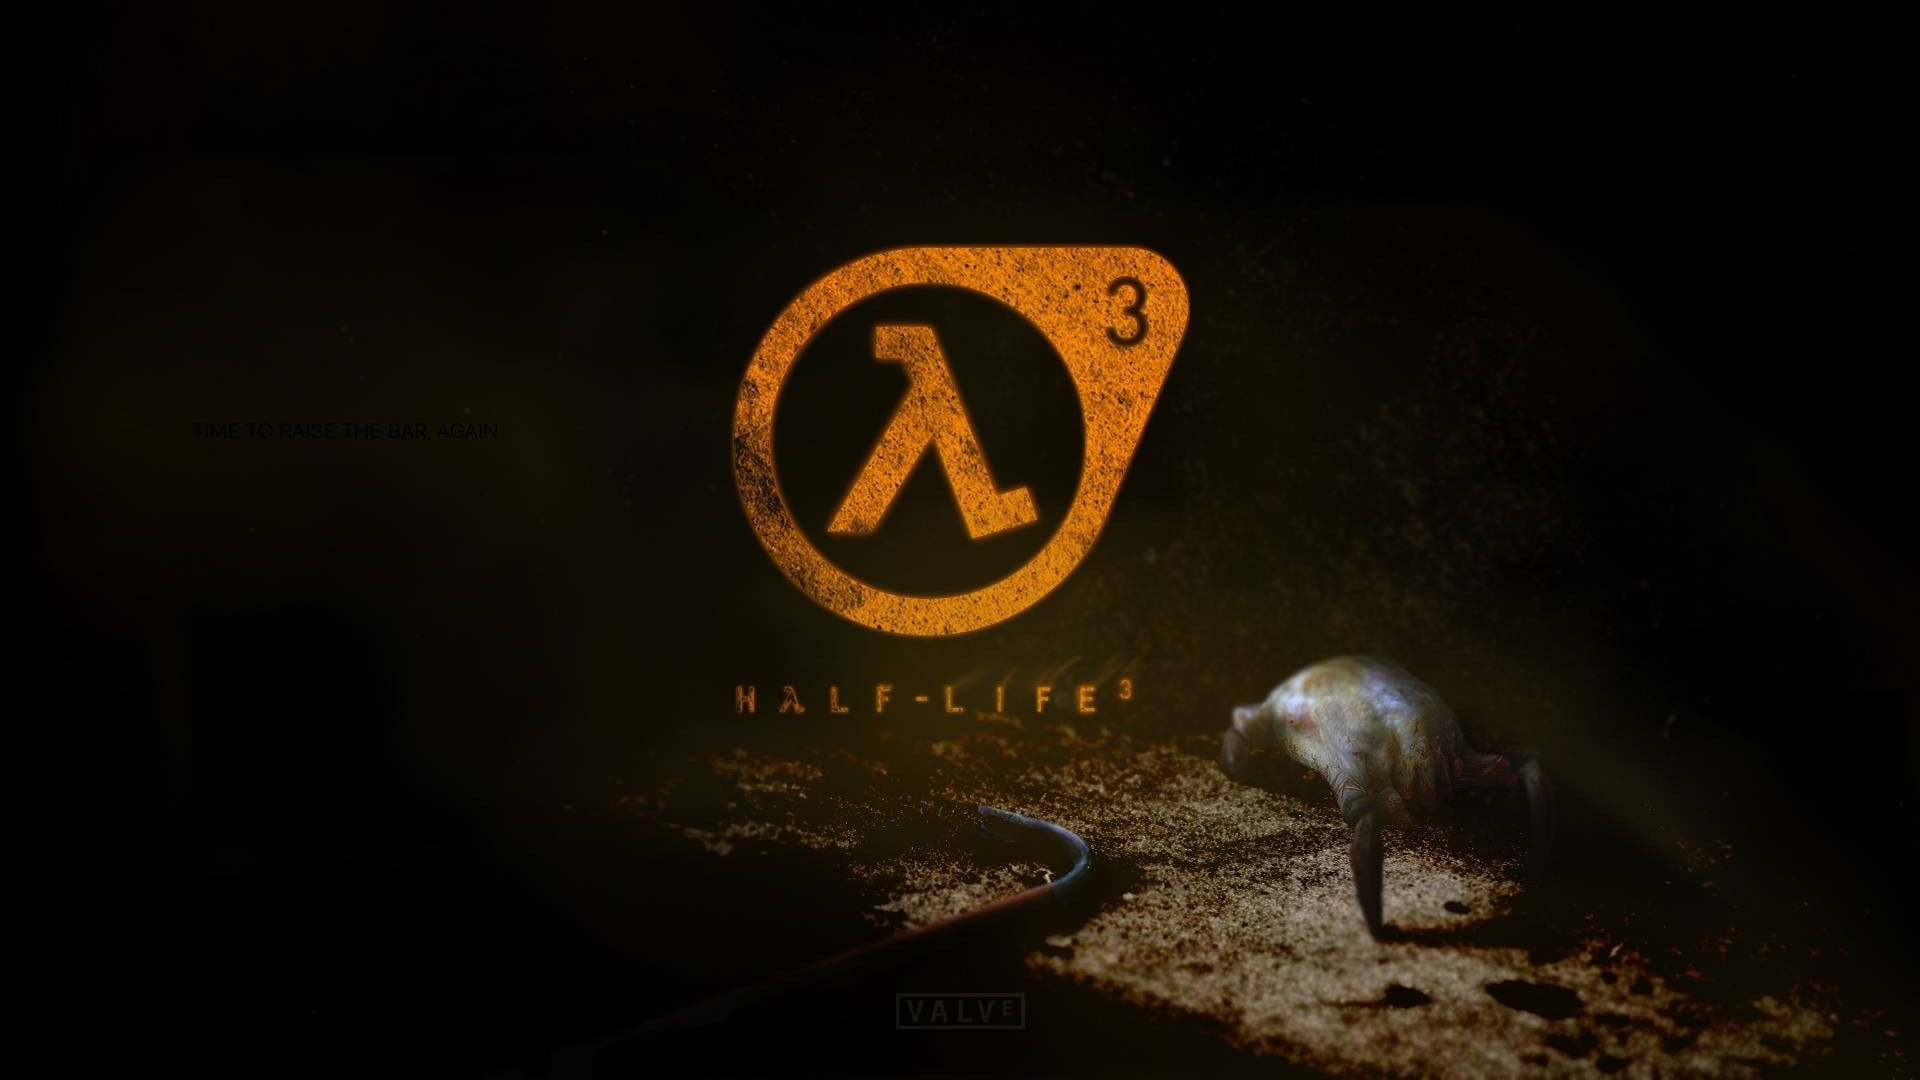 Half-life Logo On Dark Wooden Room Background